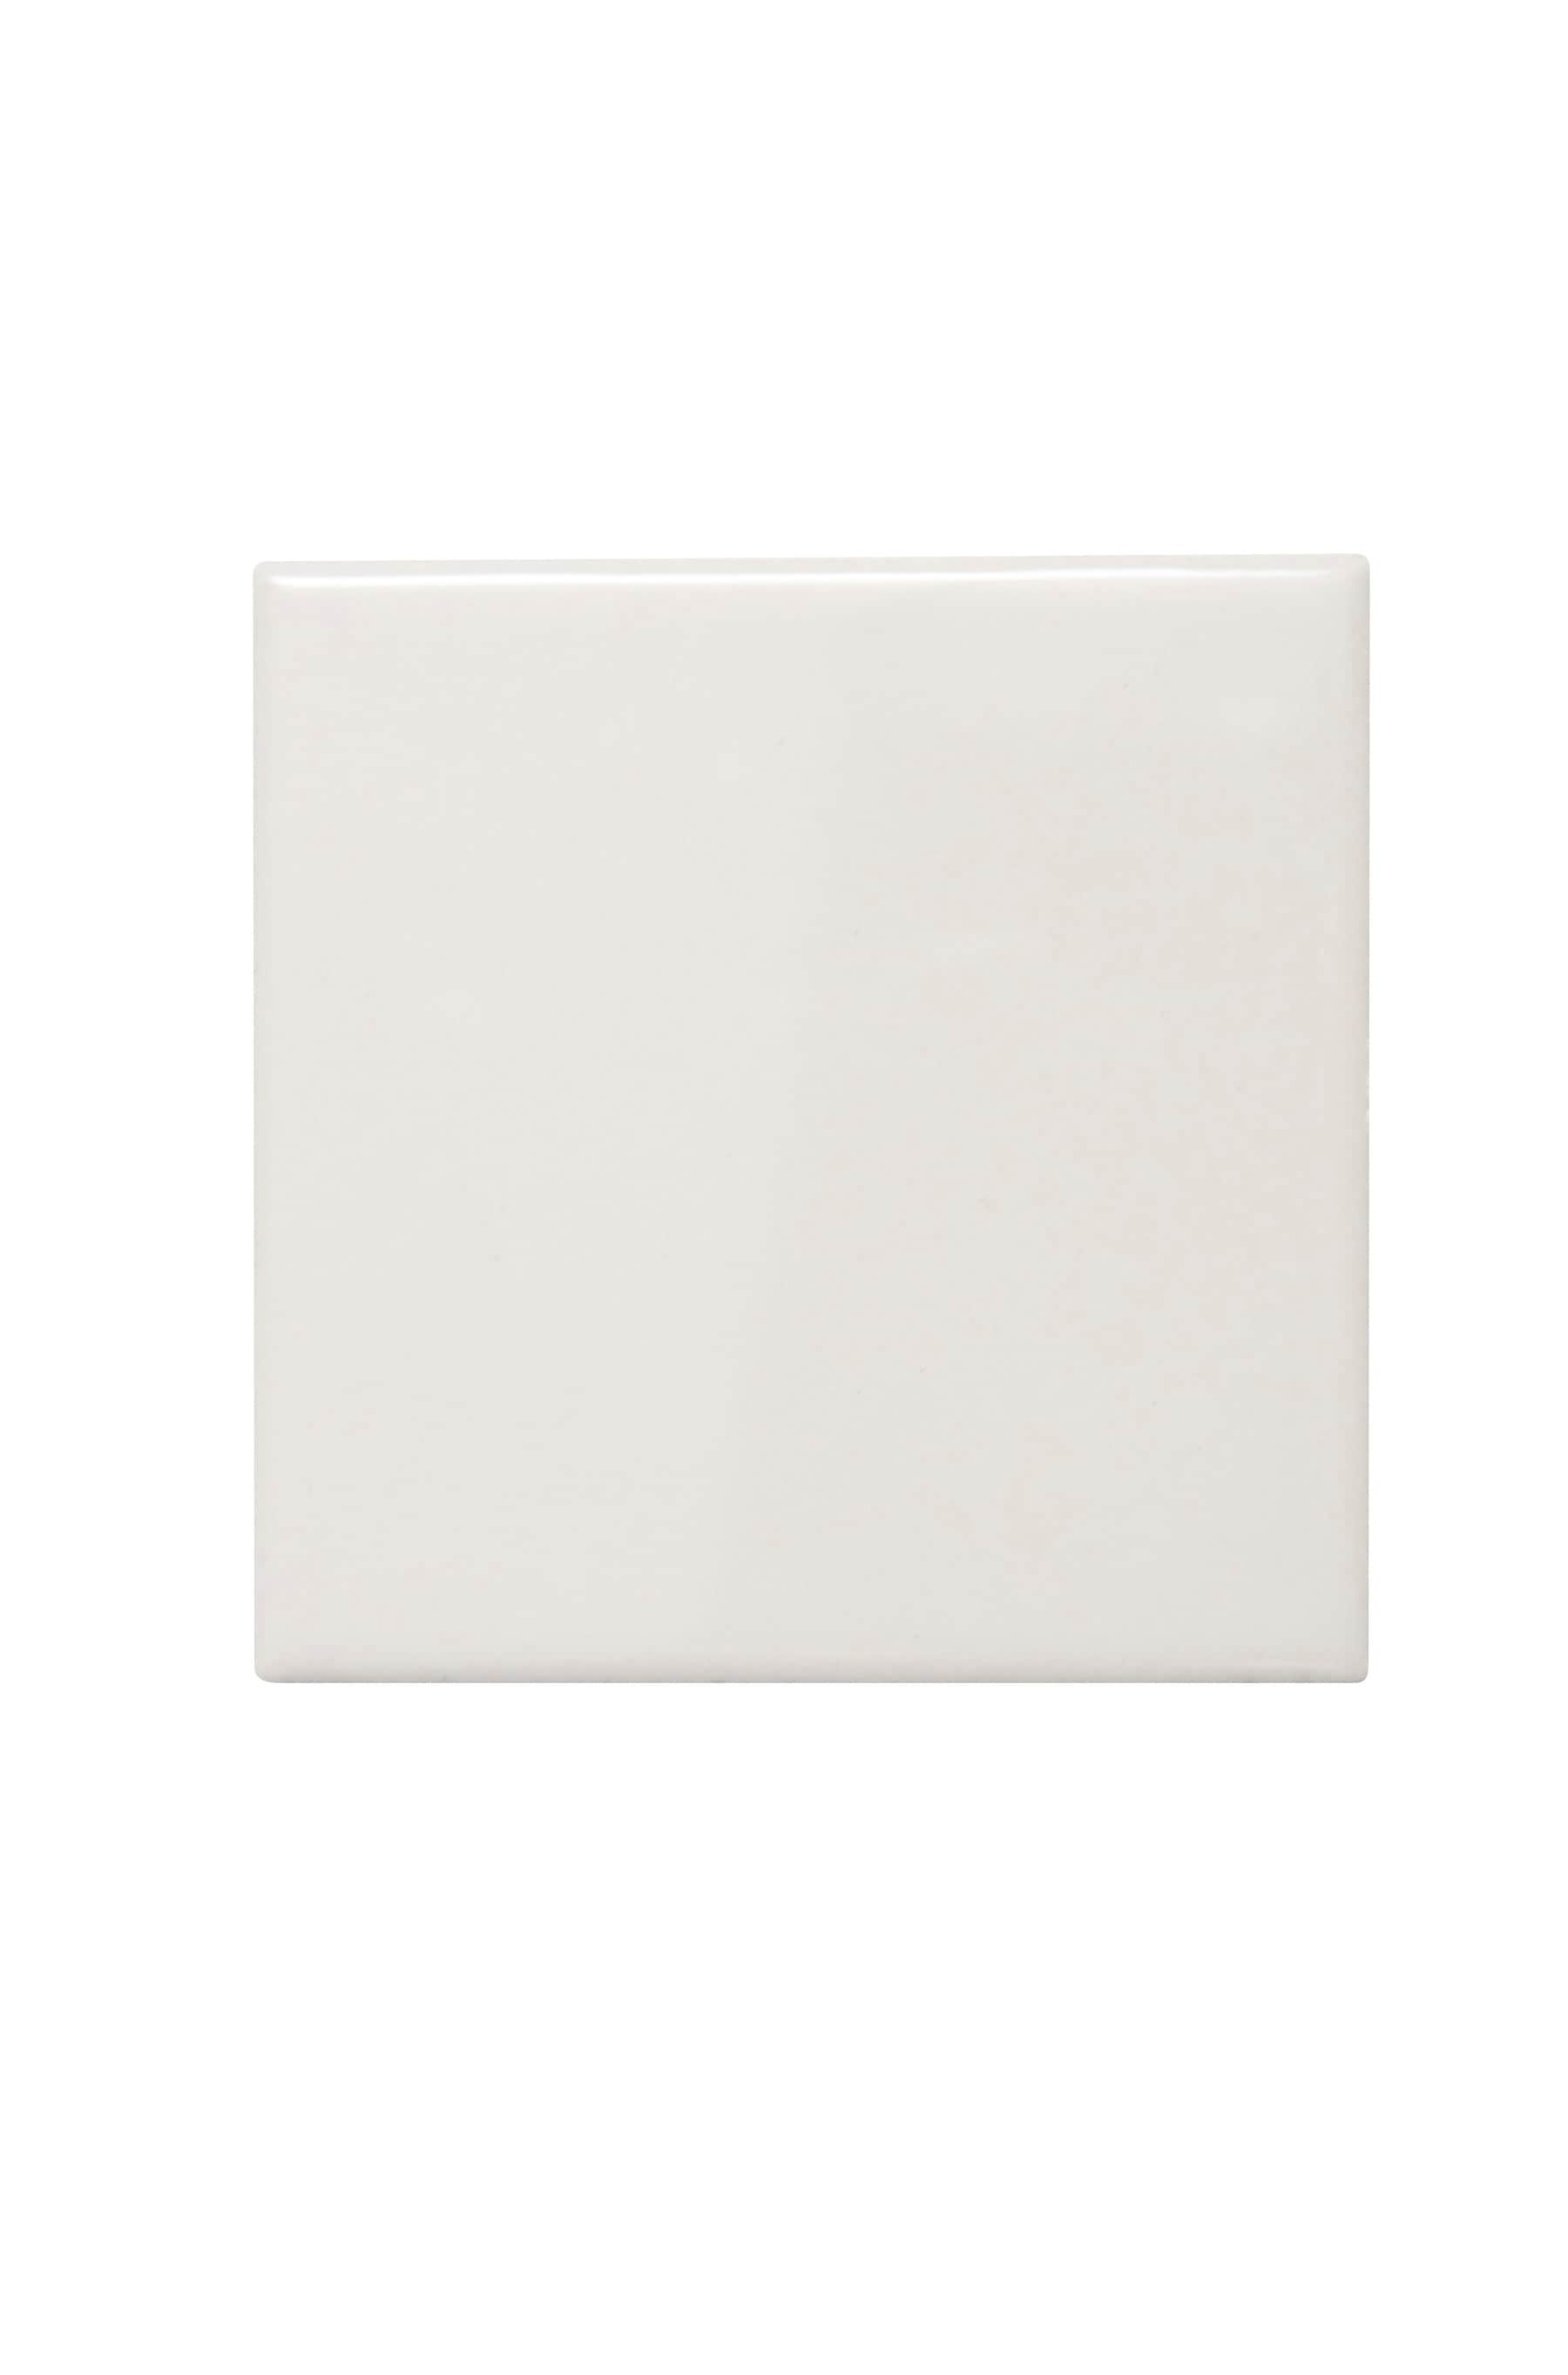 Set of 12 Glossy White Ceramic Tiles For Arts & Crafts 4x4 Backsplash